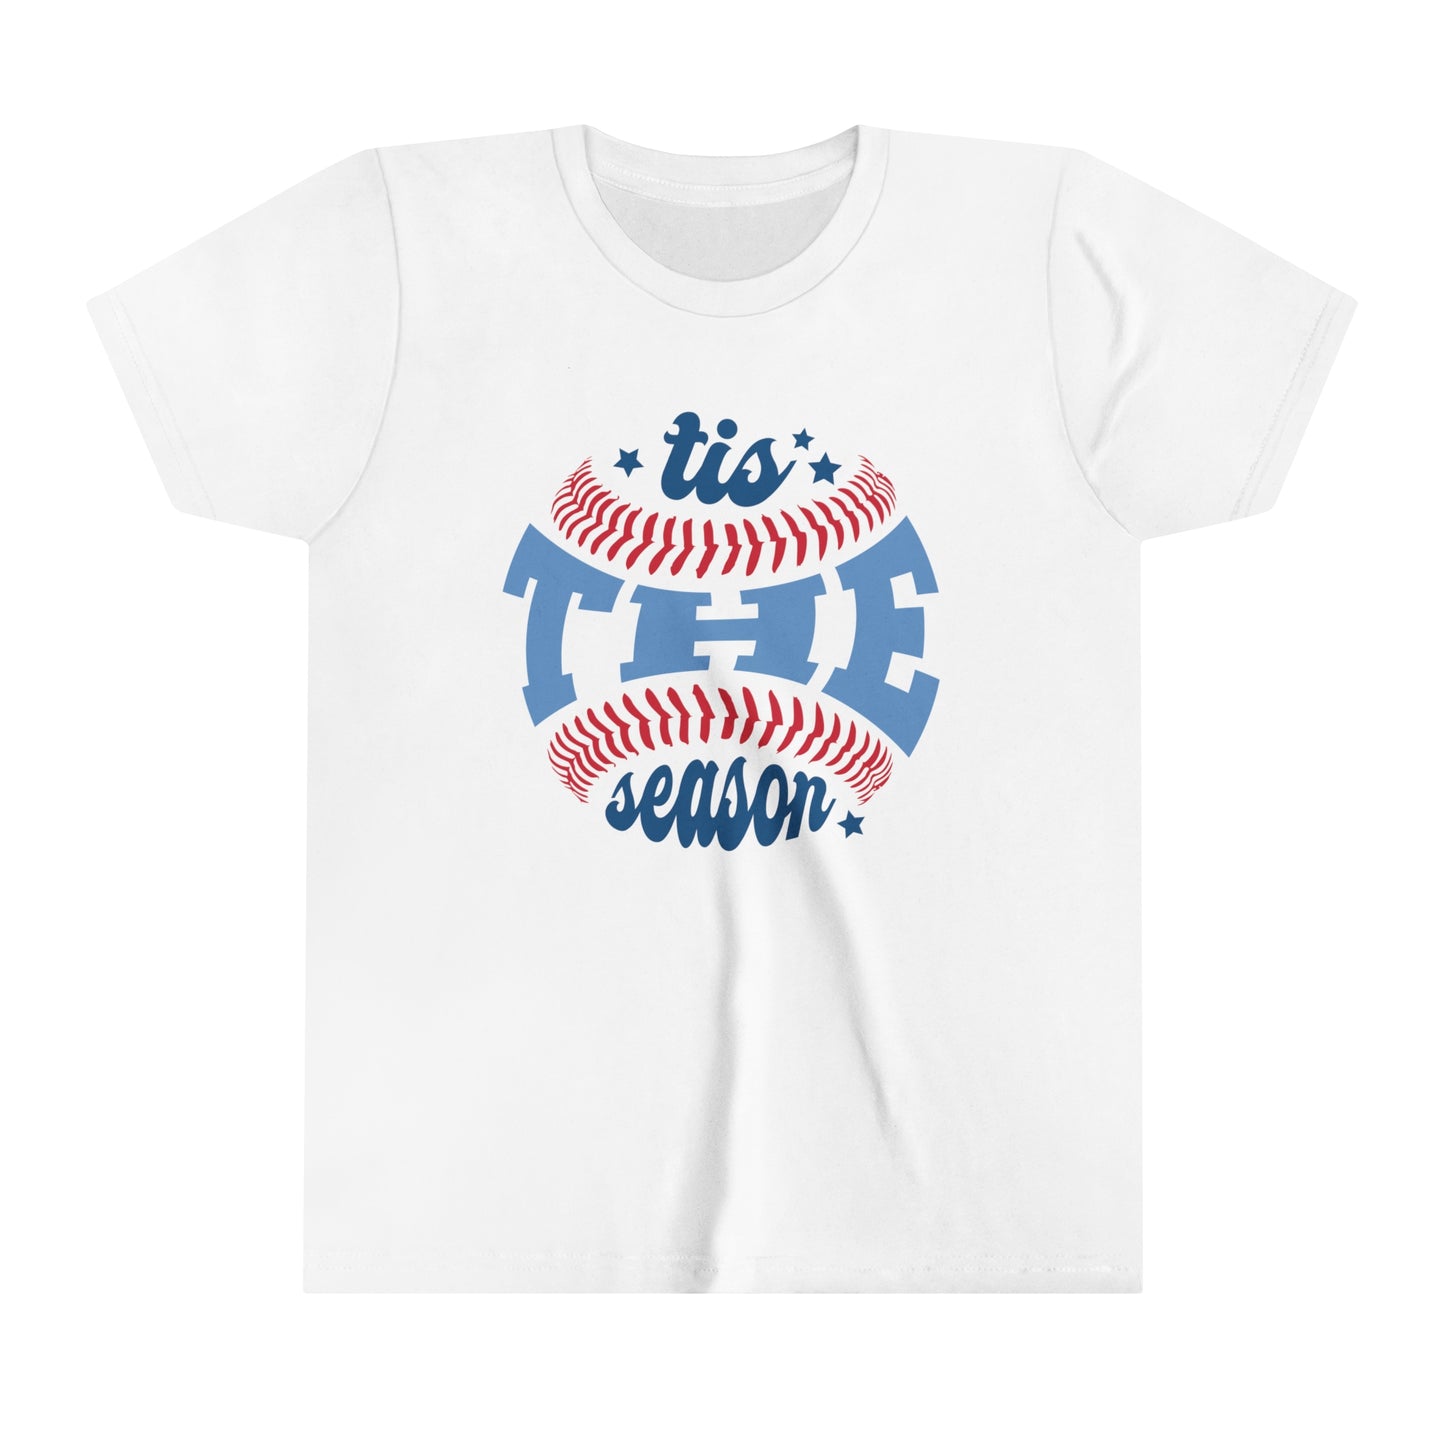 Tis the Season Baseball Unisex Youth Shirt